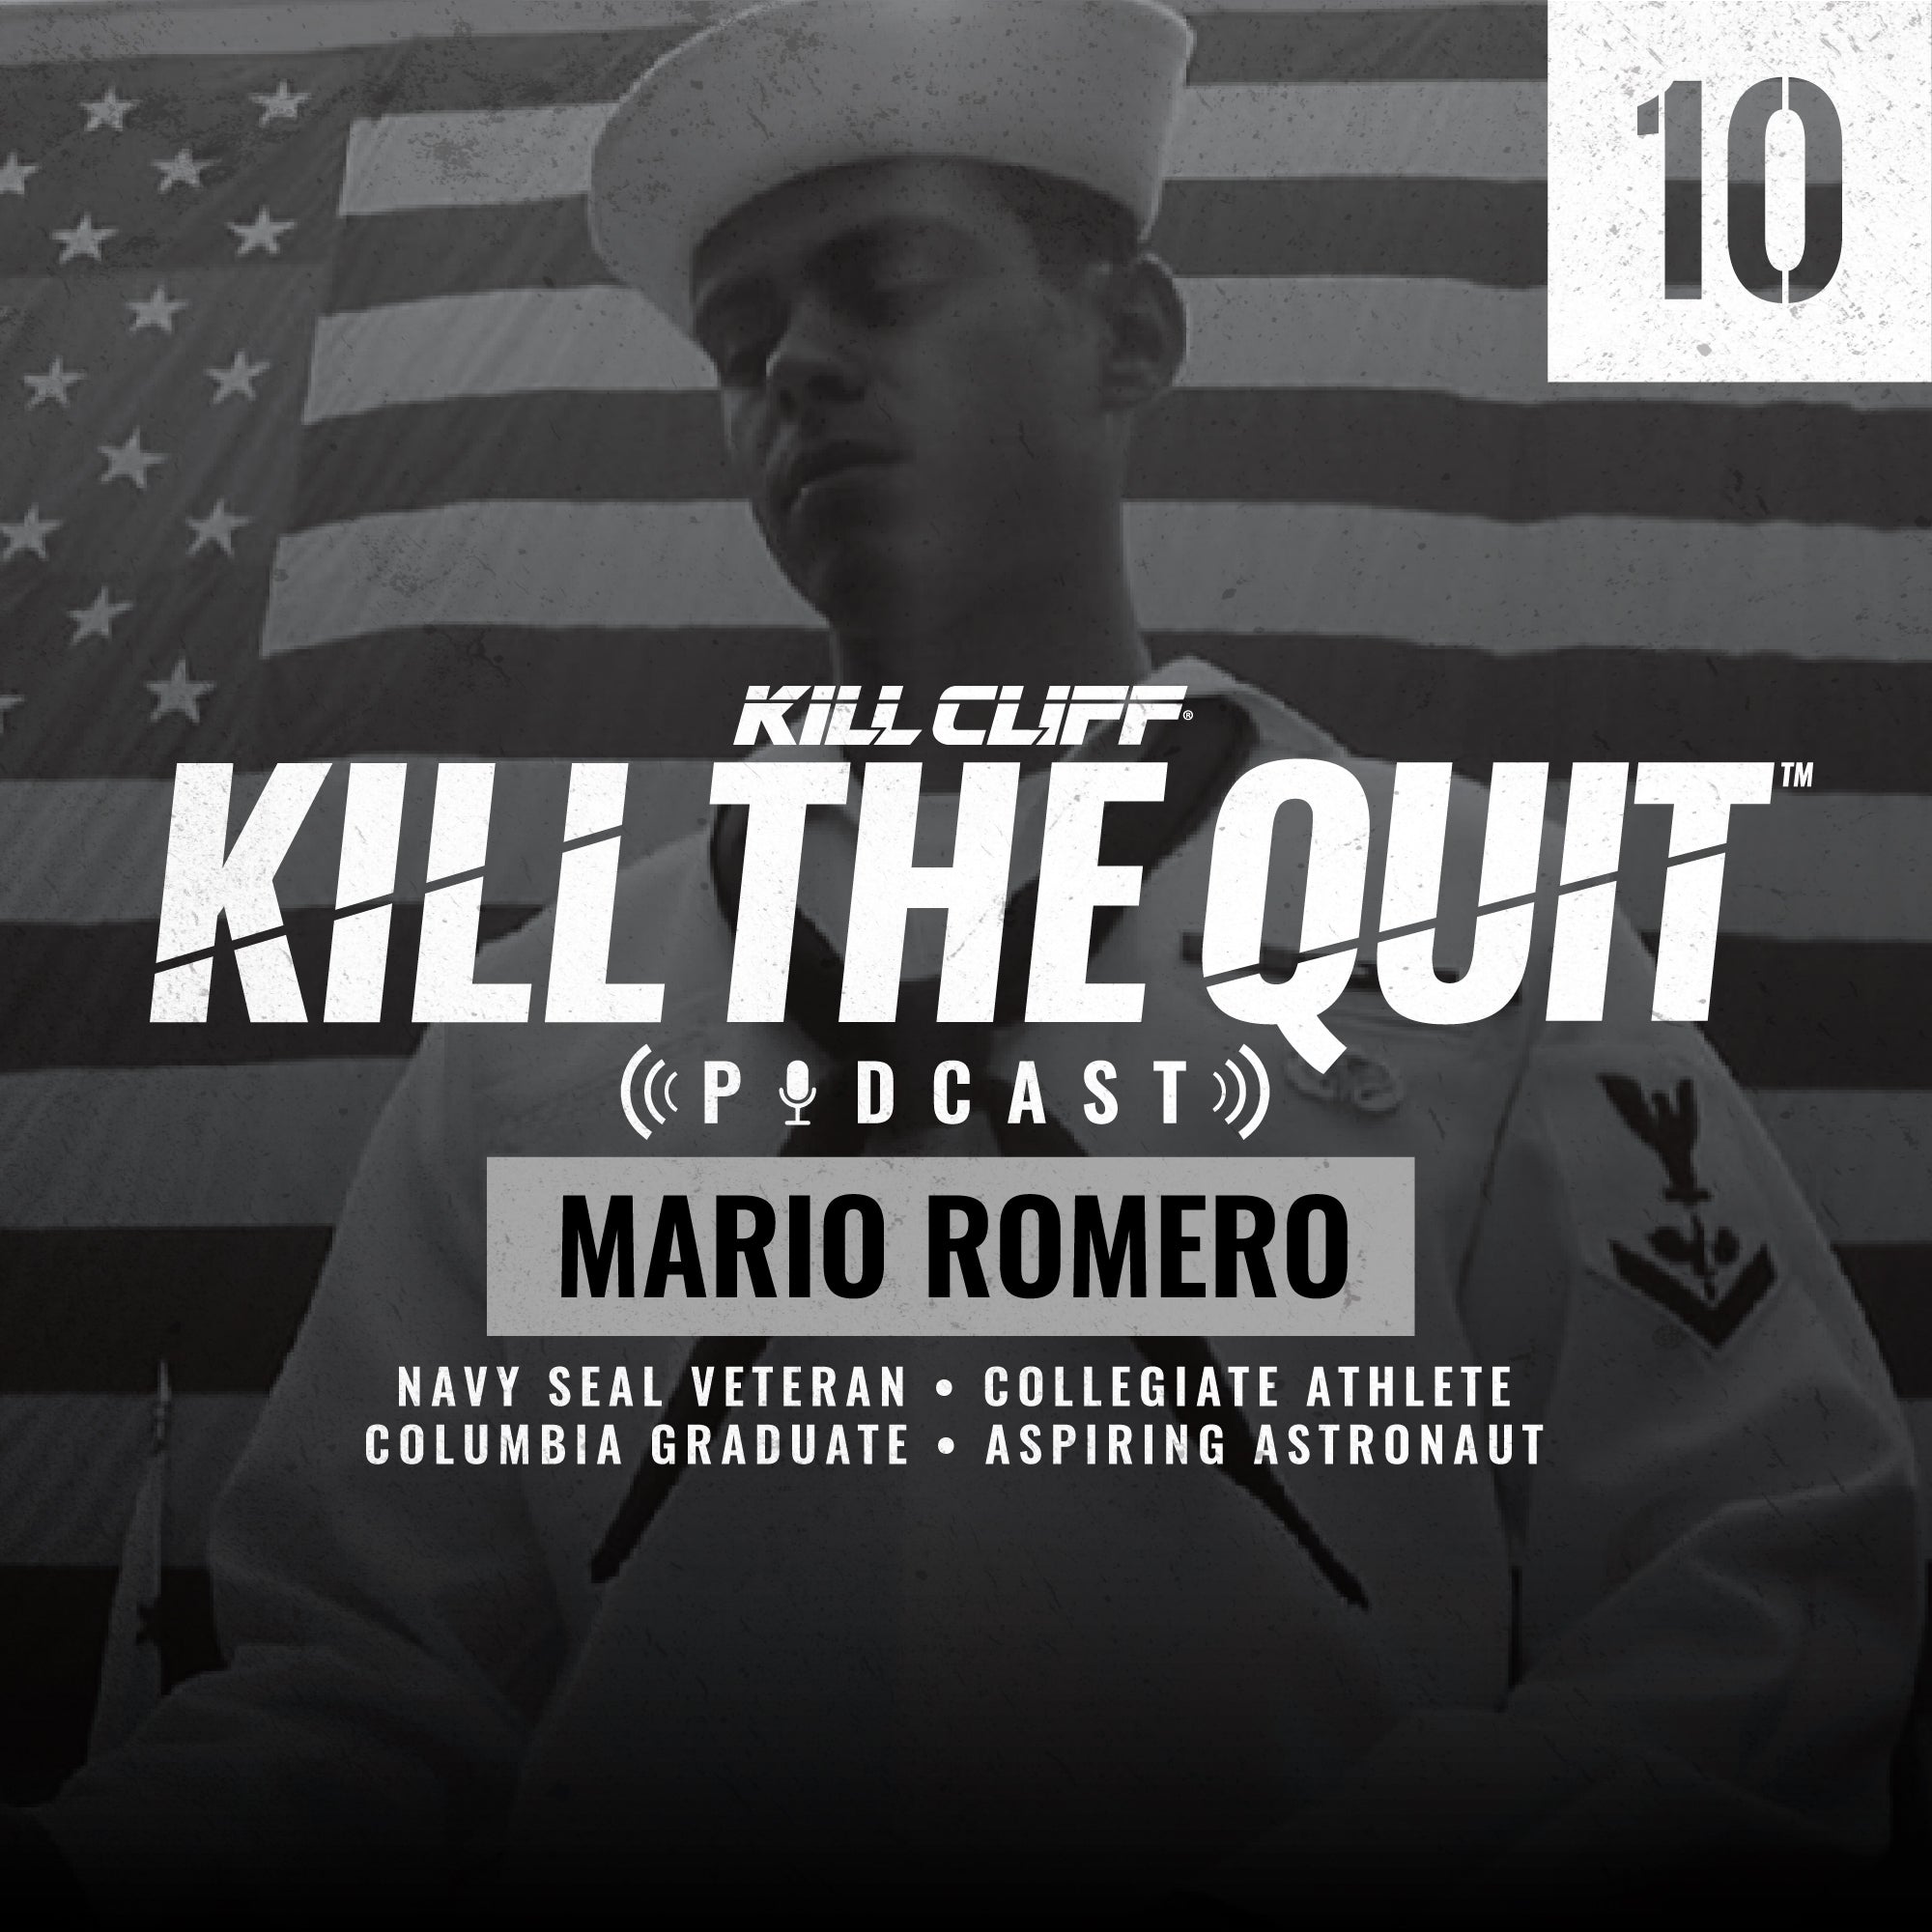 PODCAST Ep. 010 - Mario Romero - Kill Cliff